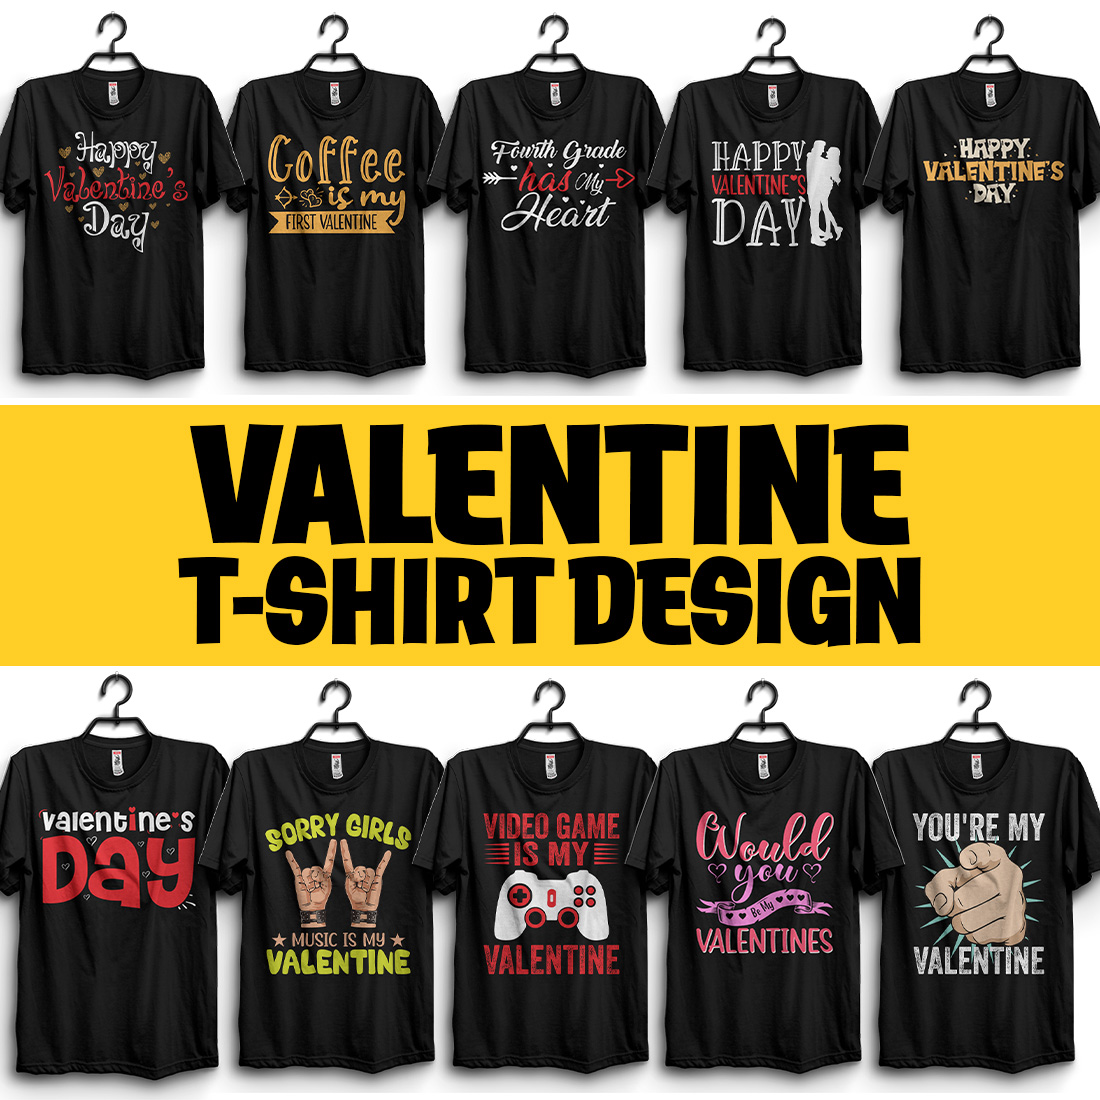 Valentine T-Shirt Designs Bundle cover image.